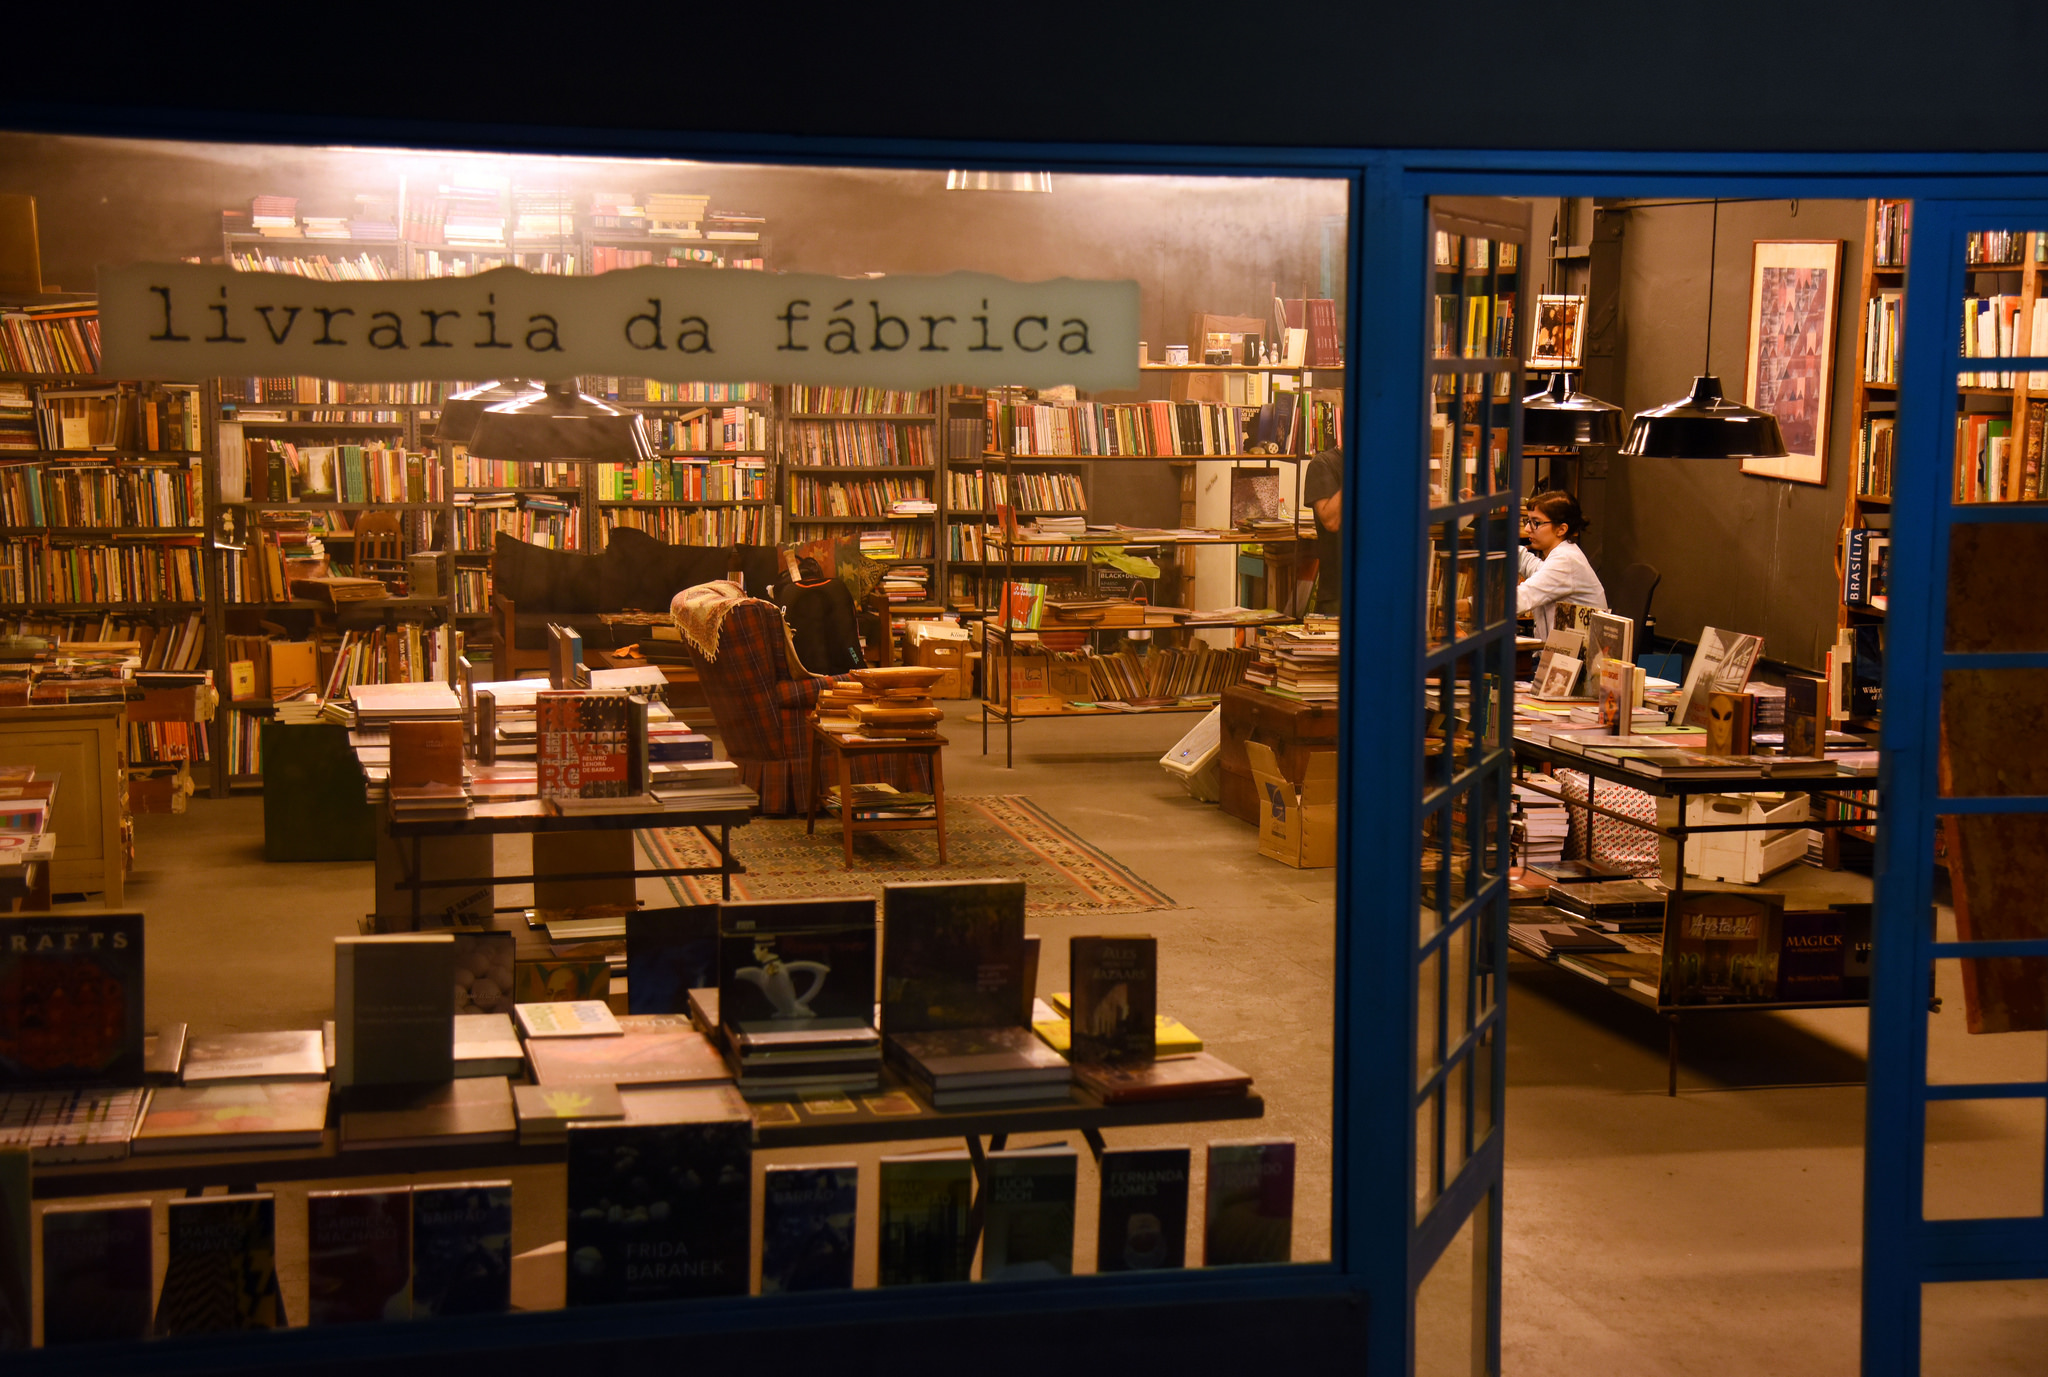 The Livraria da Fábrica was set up by Felipe Varella and stocks a wide variety of books both old and new, Rio de Janeiro, Brazil, Brazil News,